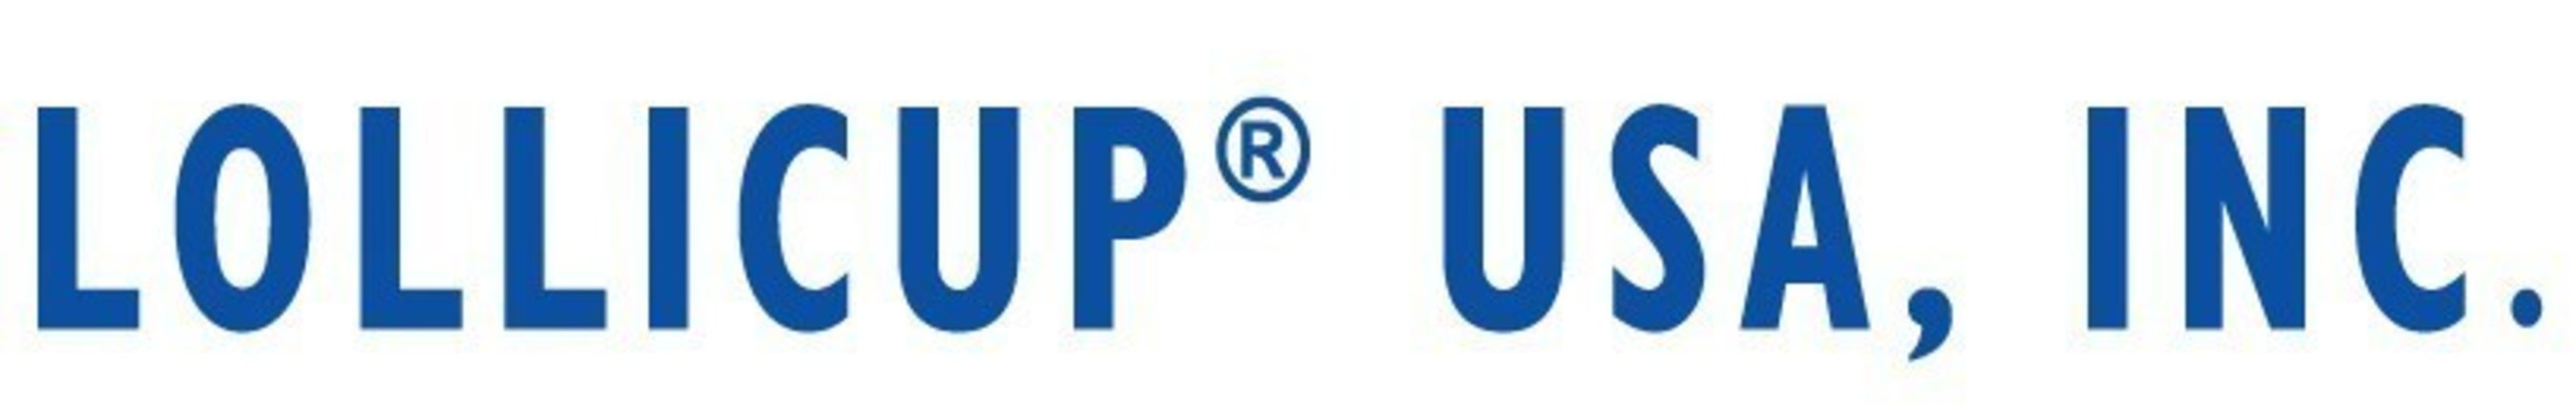 Lollicup USA, Inc. logo